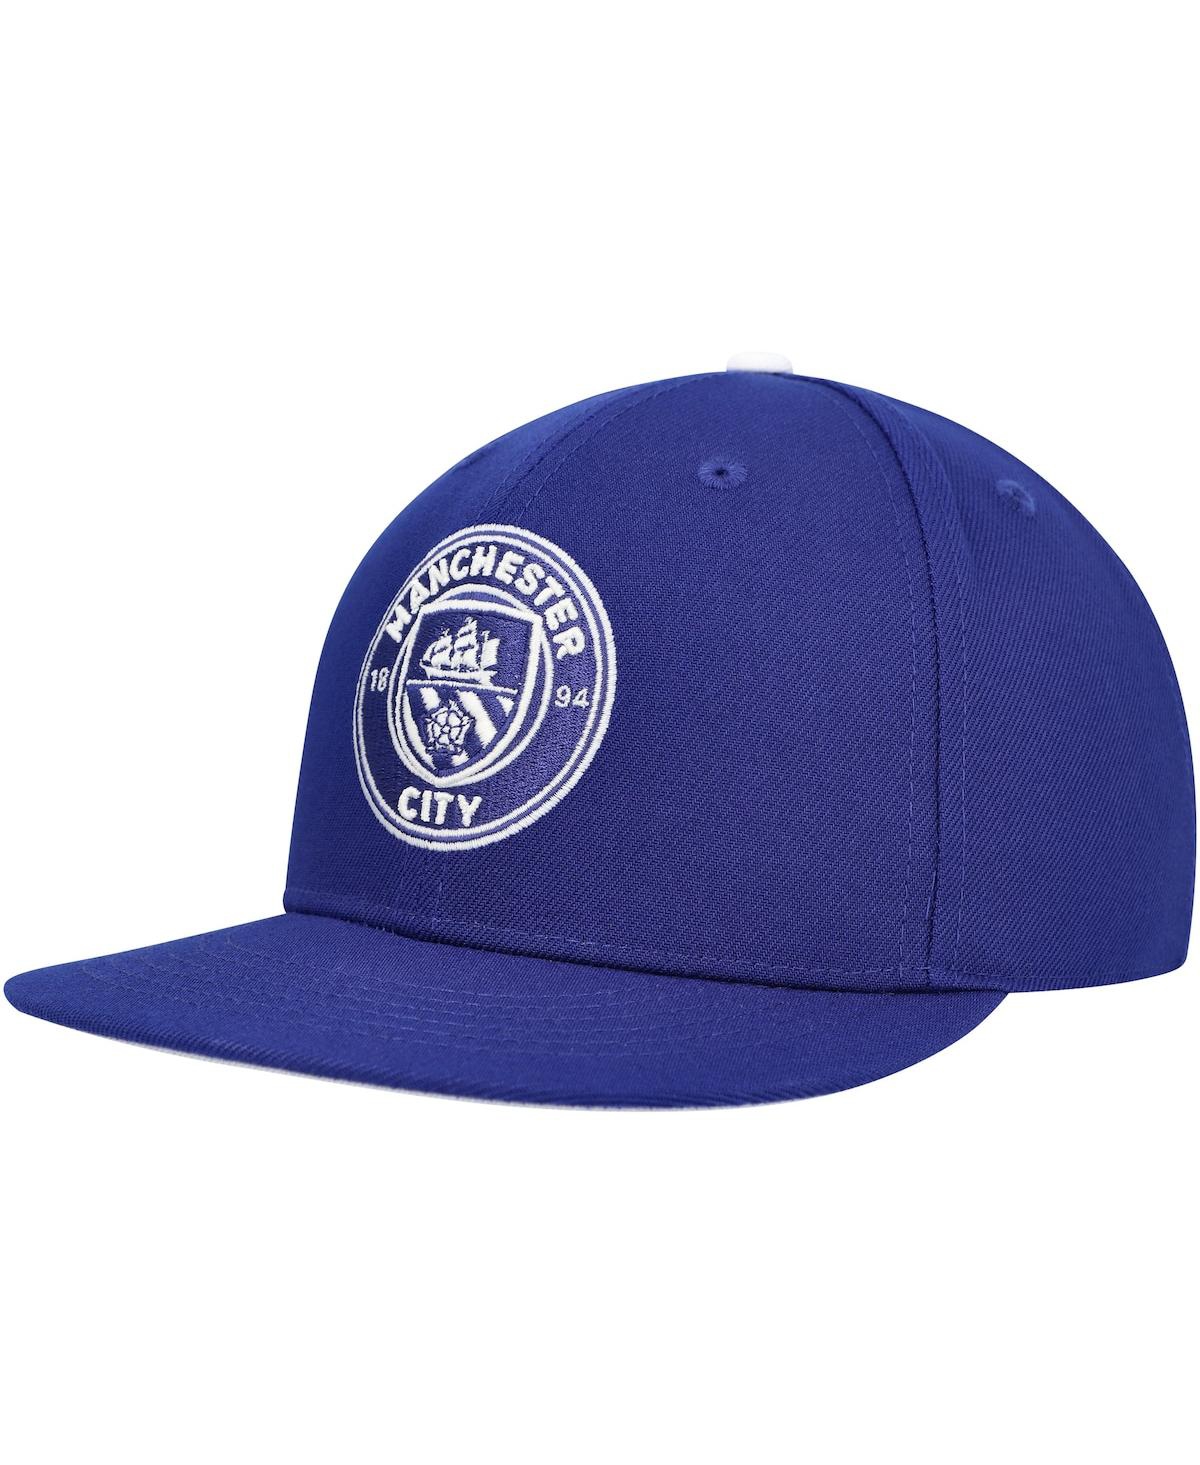 Shop Fan Ink Men's Royal Manchester City America's Game Snapback Hat